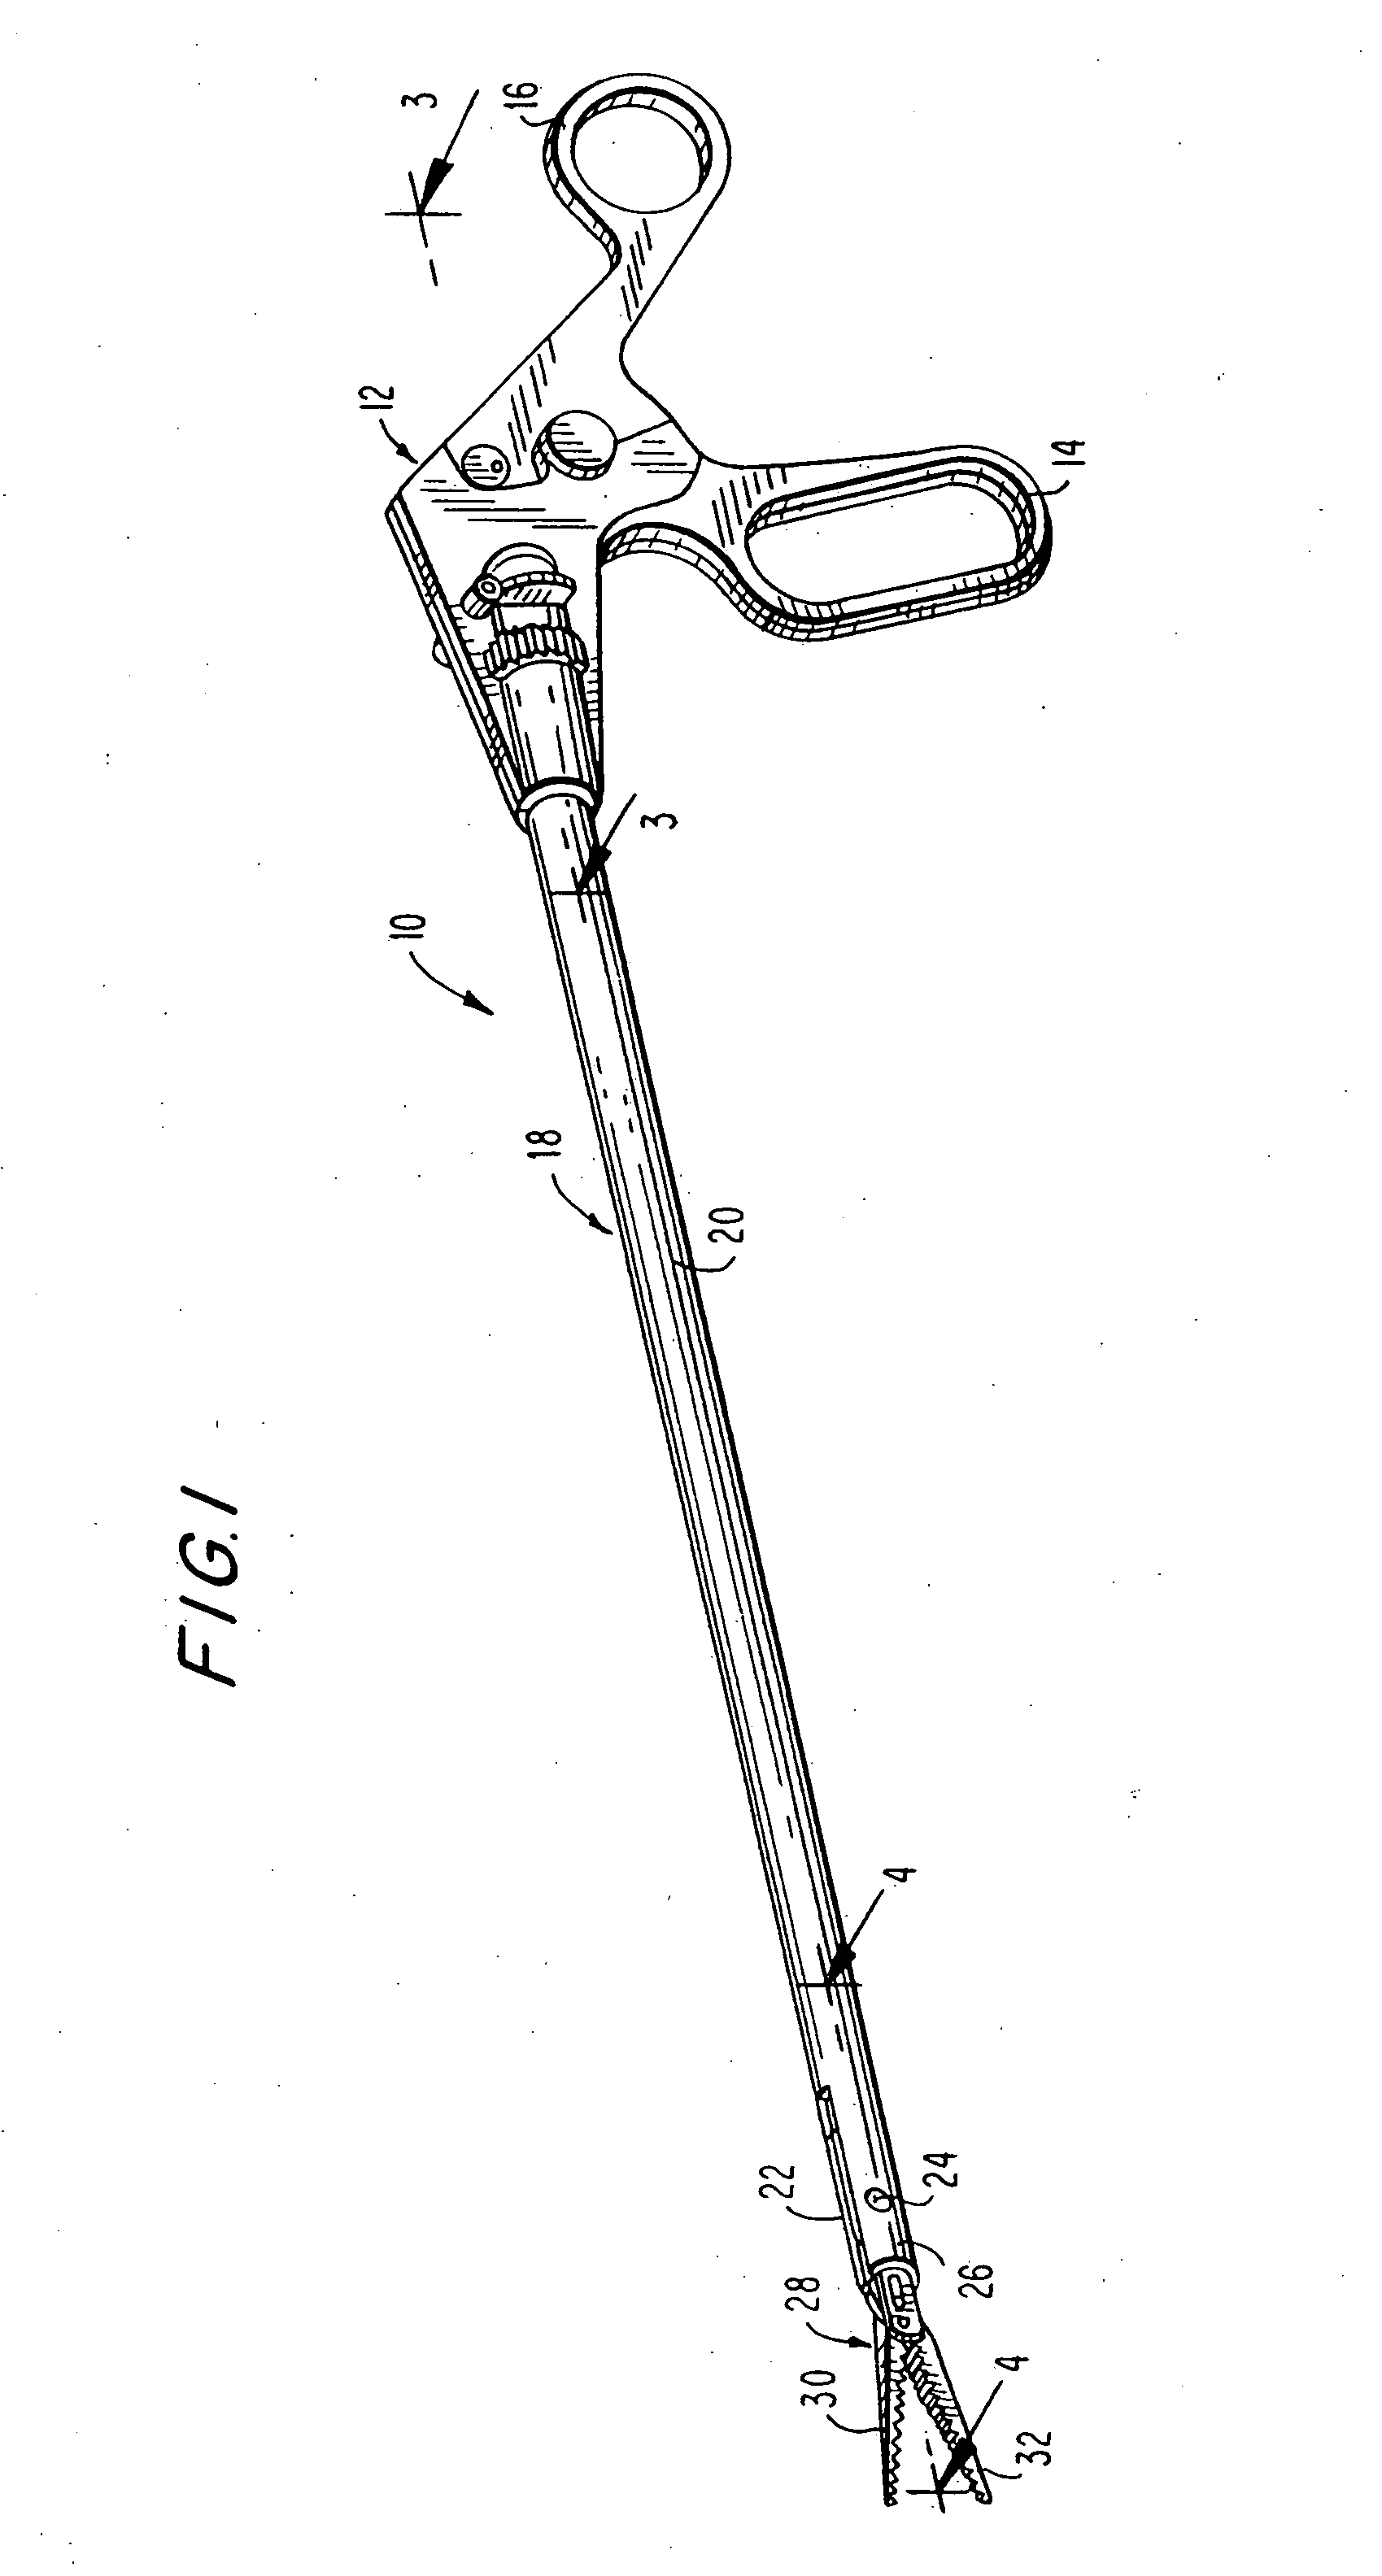 Articulating endoscopic surgical apparatus